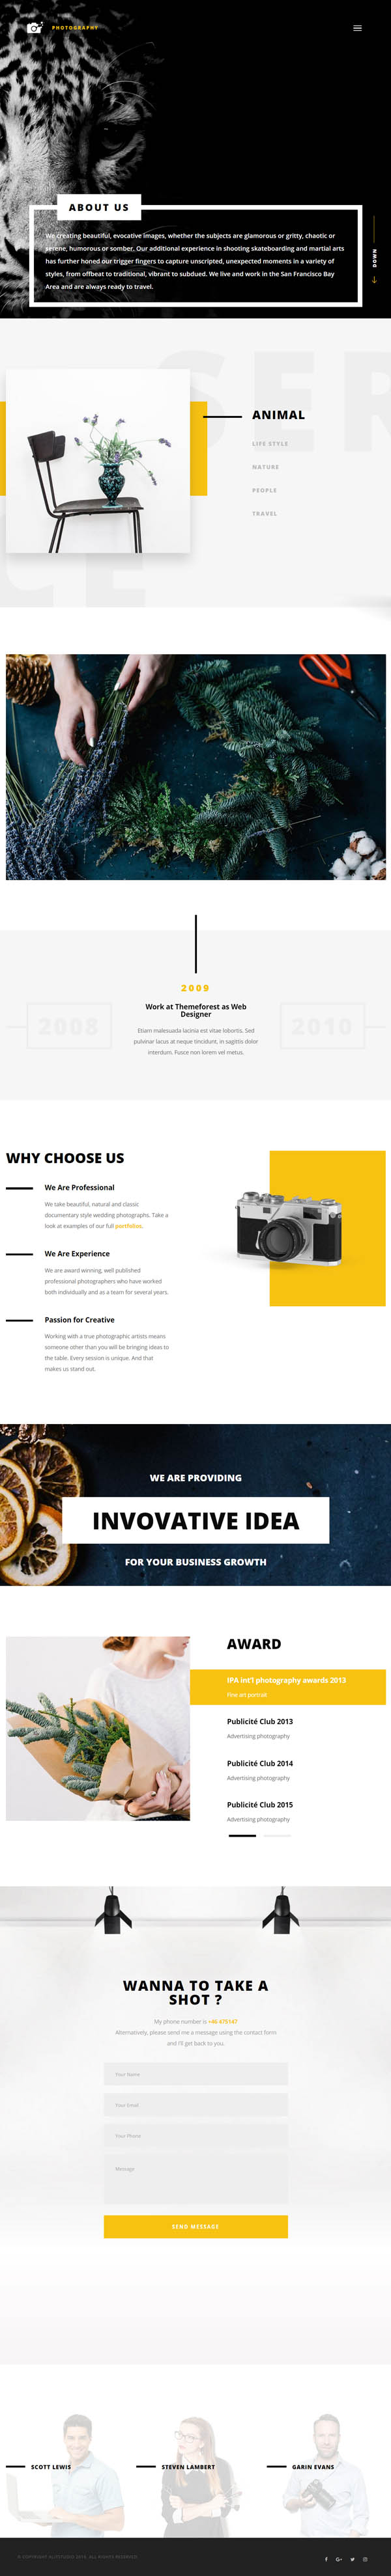 Cephenus – Photography, Portfolio & Gallery WordPress Theme